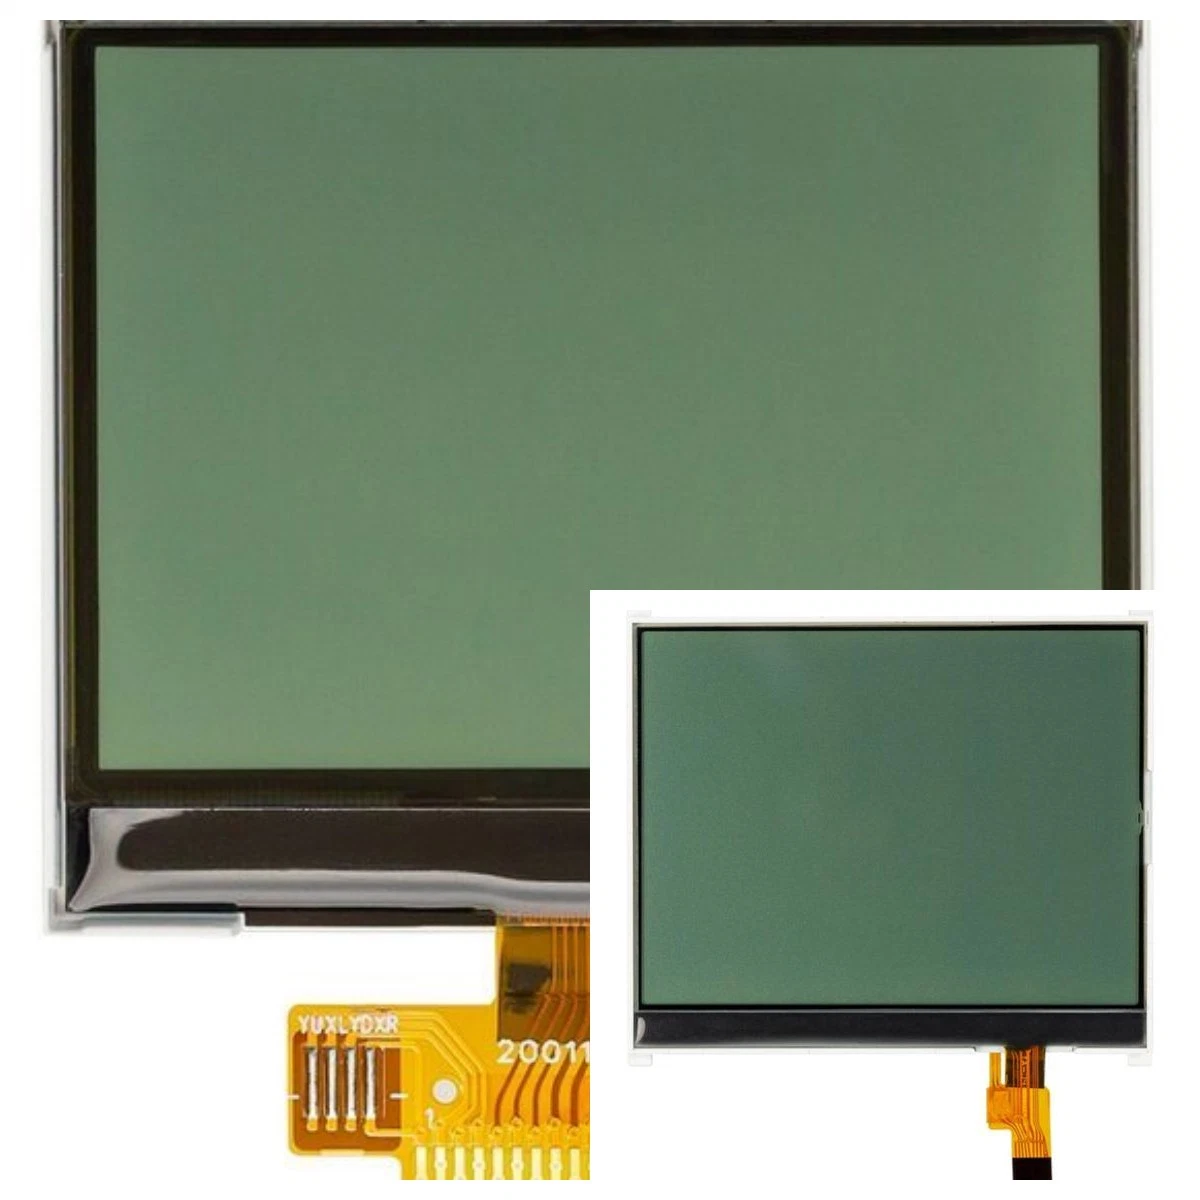 Module LCD graphique conforme à la directive RoHS OEM/ODM Module LCD mono 7 segments.